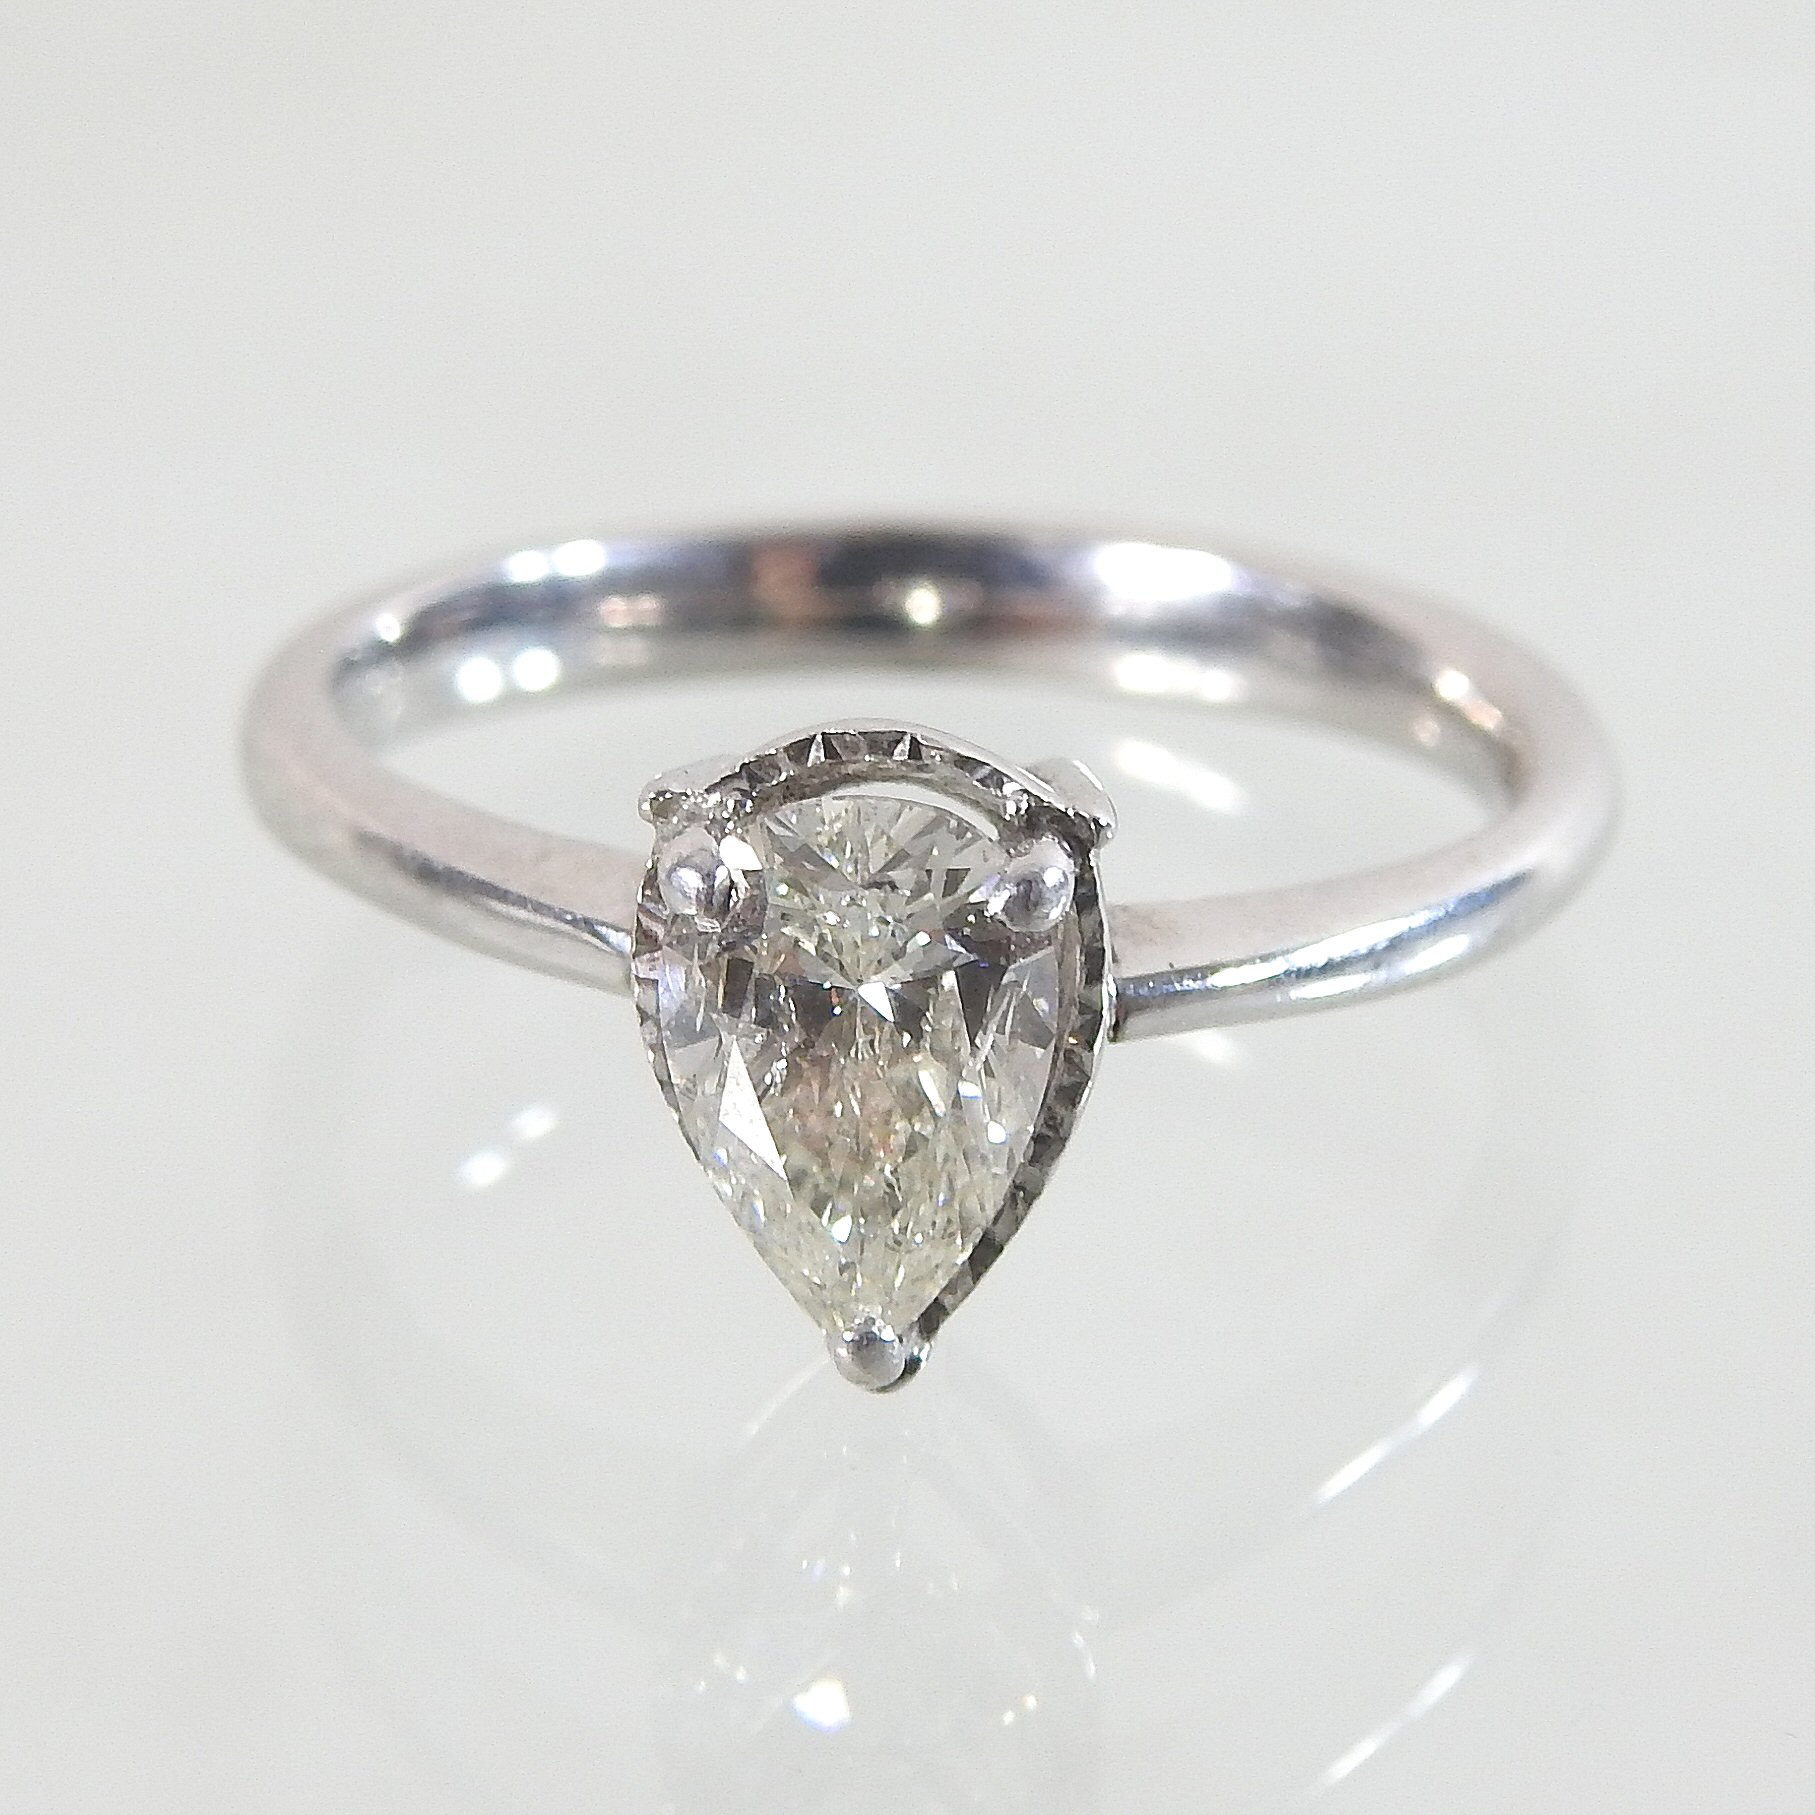 An 18 carat gold single stone ring,